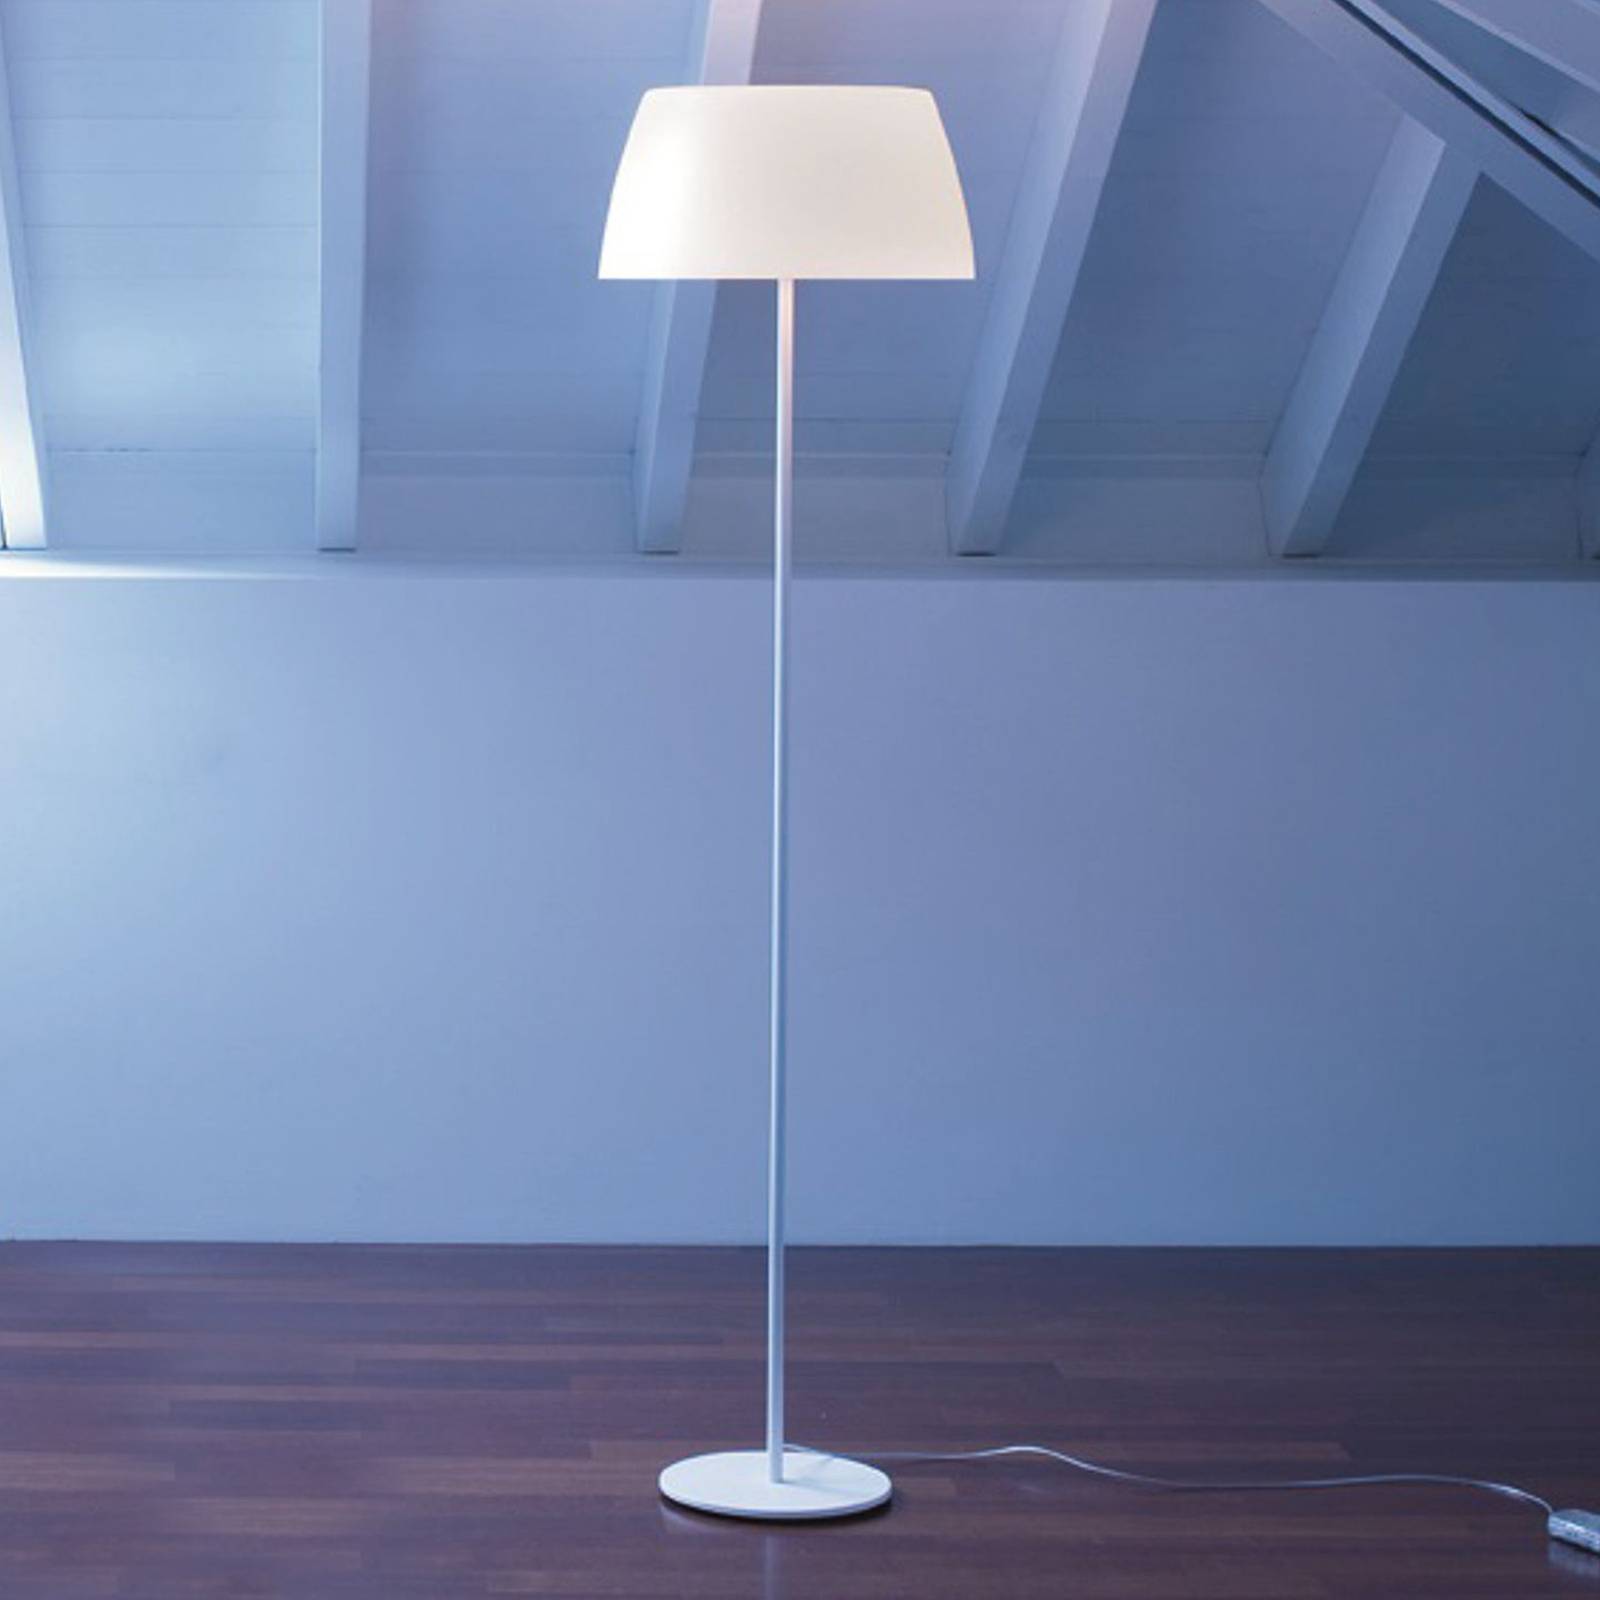 Prandina Ginger F30 lampa stojąca, biała, Ø 36 cm